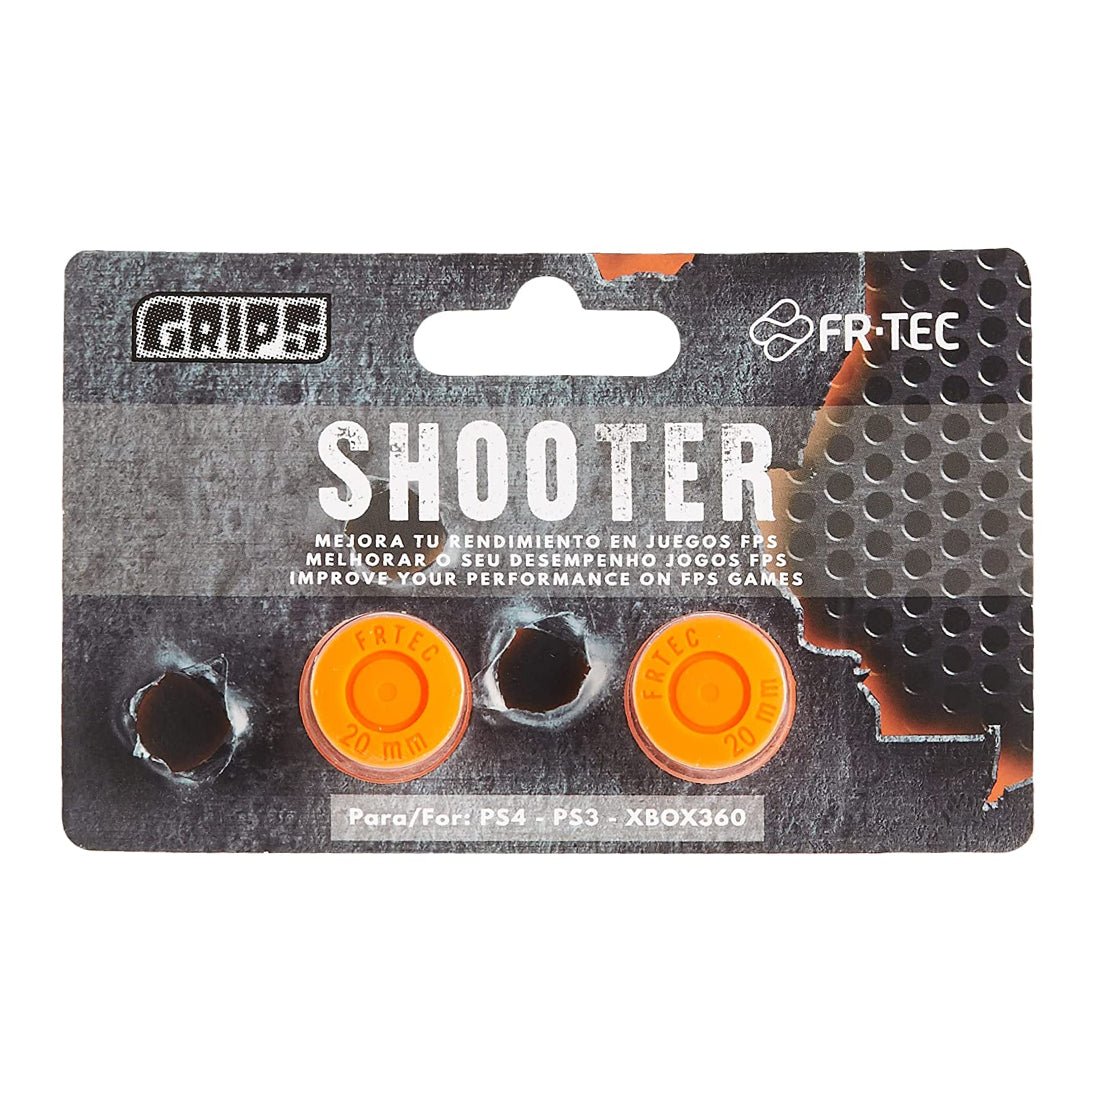 FR-TEC Shooter Grips - Orange - Store 974 | ستور ٩٧٤